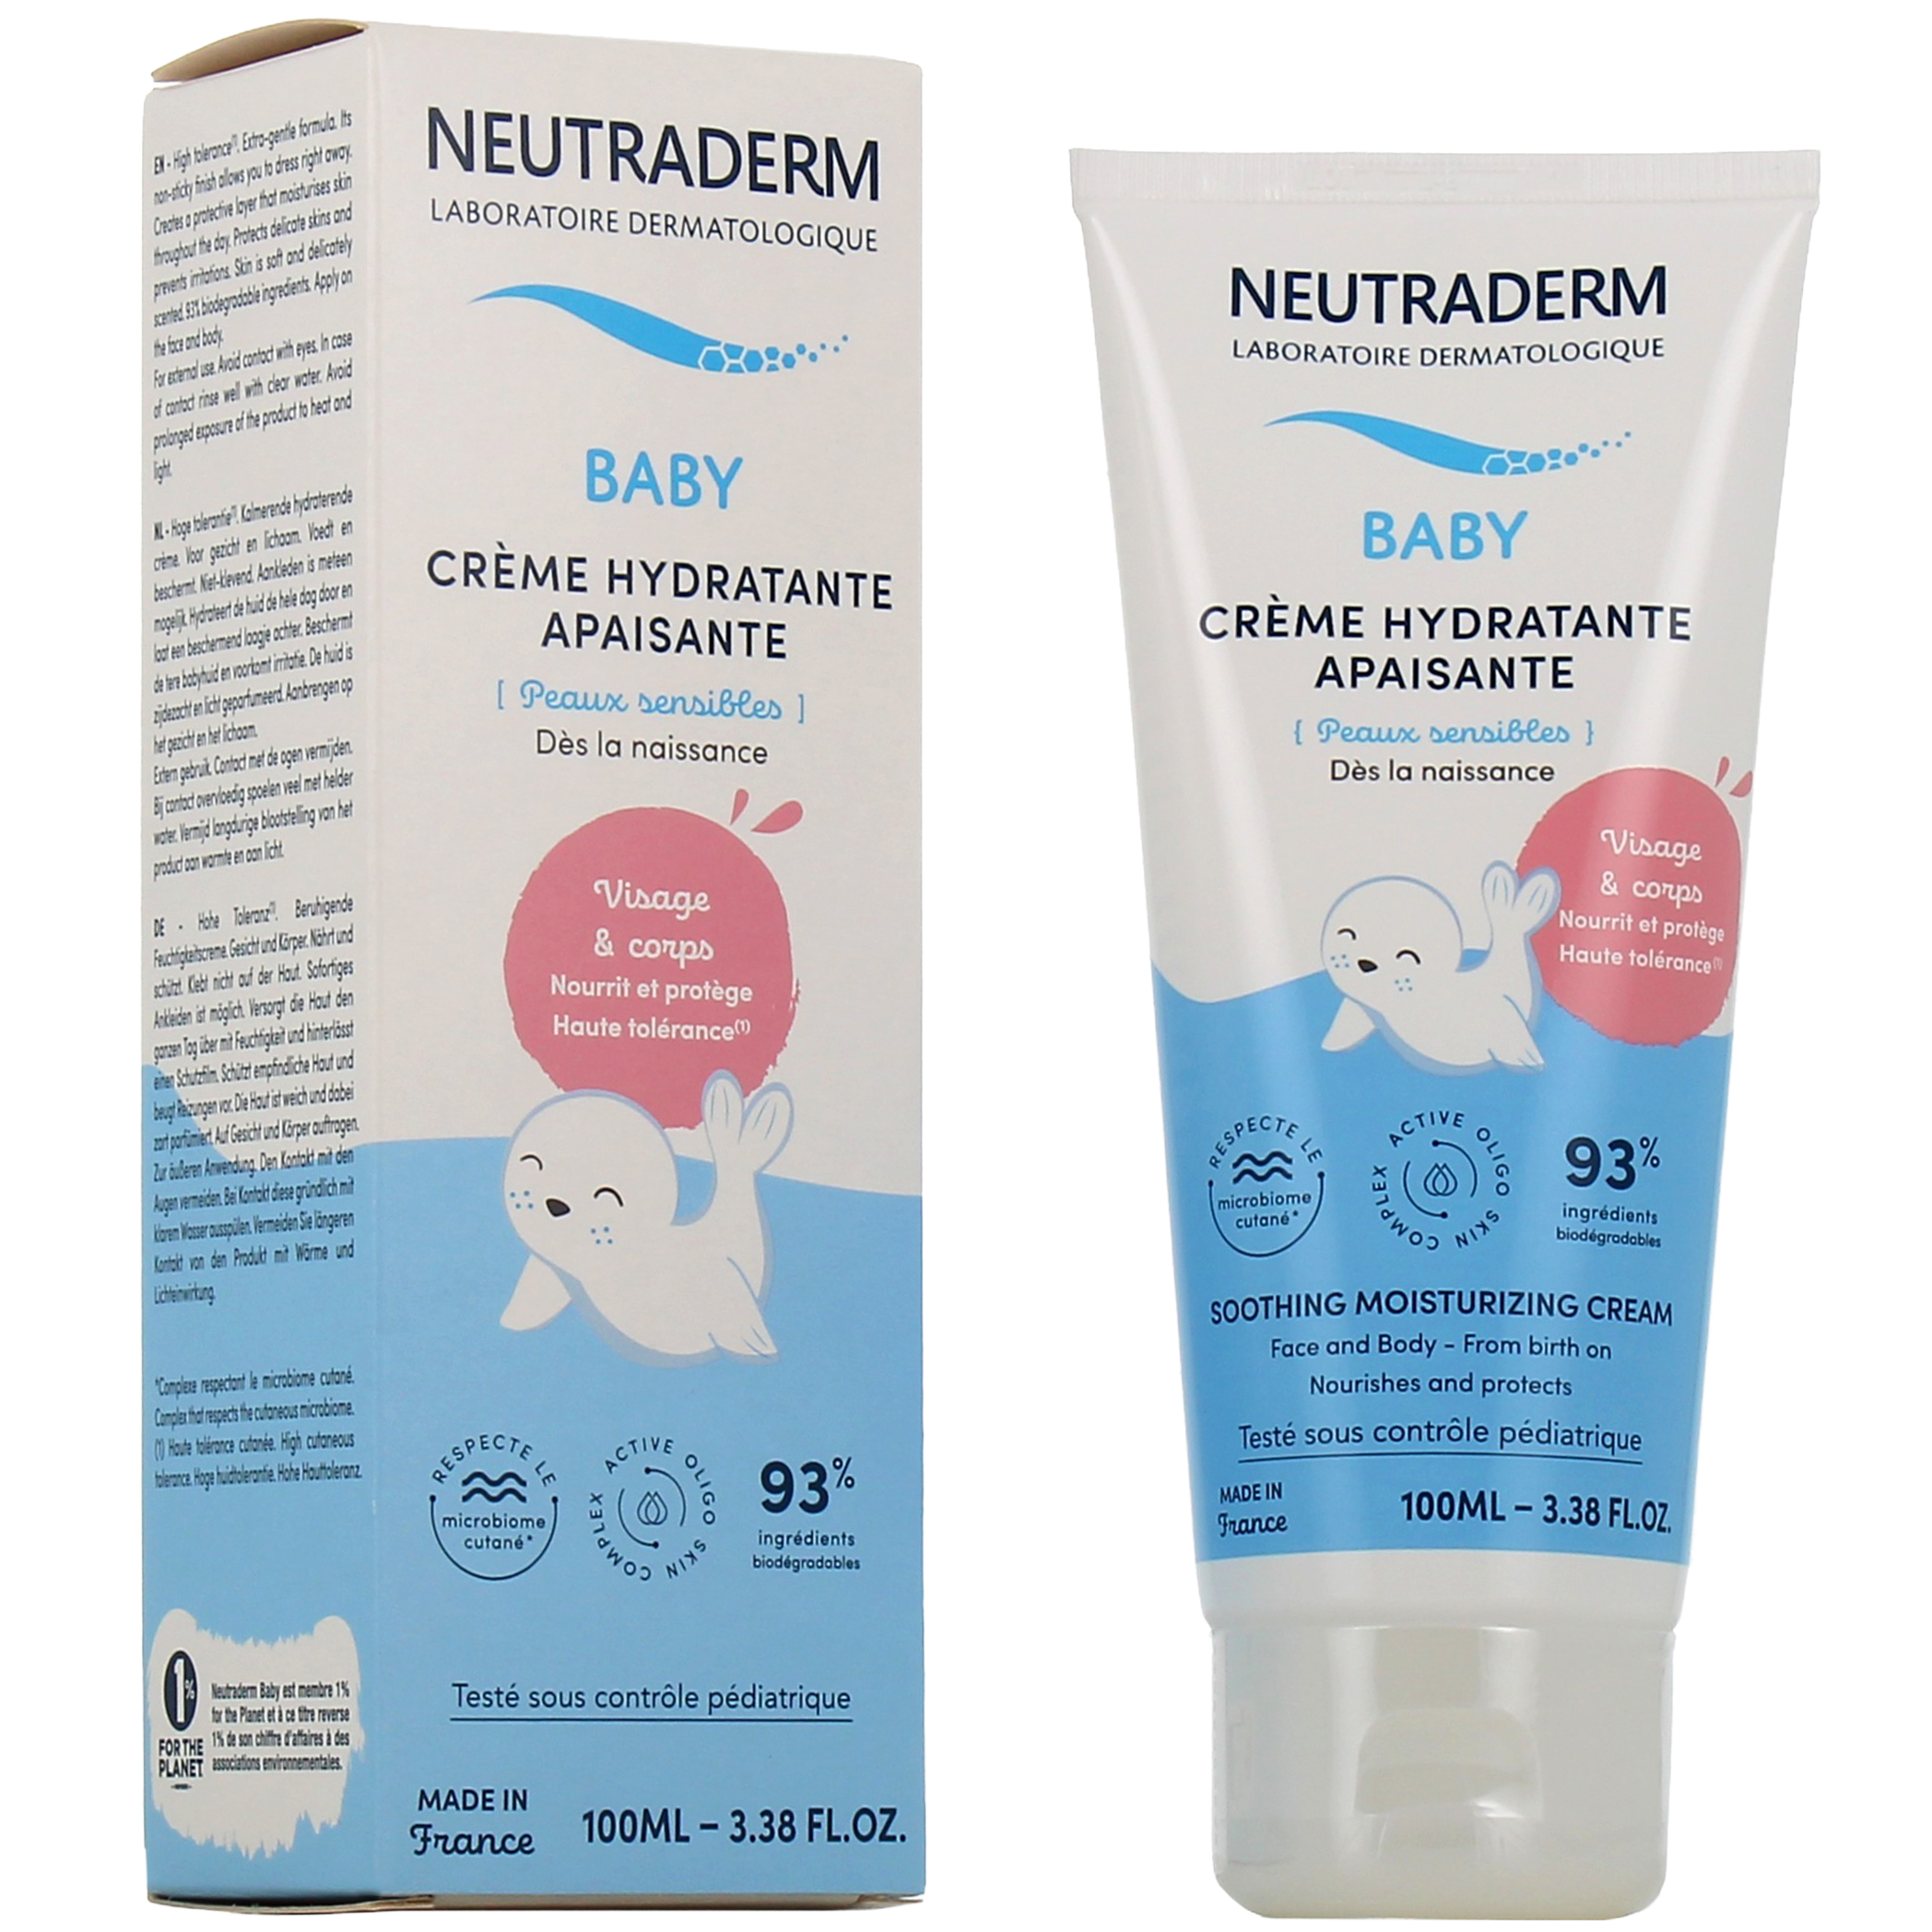 https://cdn.pharmaciedesdrakkars.com/media/images/products/neutraderm-baby-creme-hydratante-apaisante-neutraderm4-1684852185.jpg